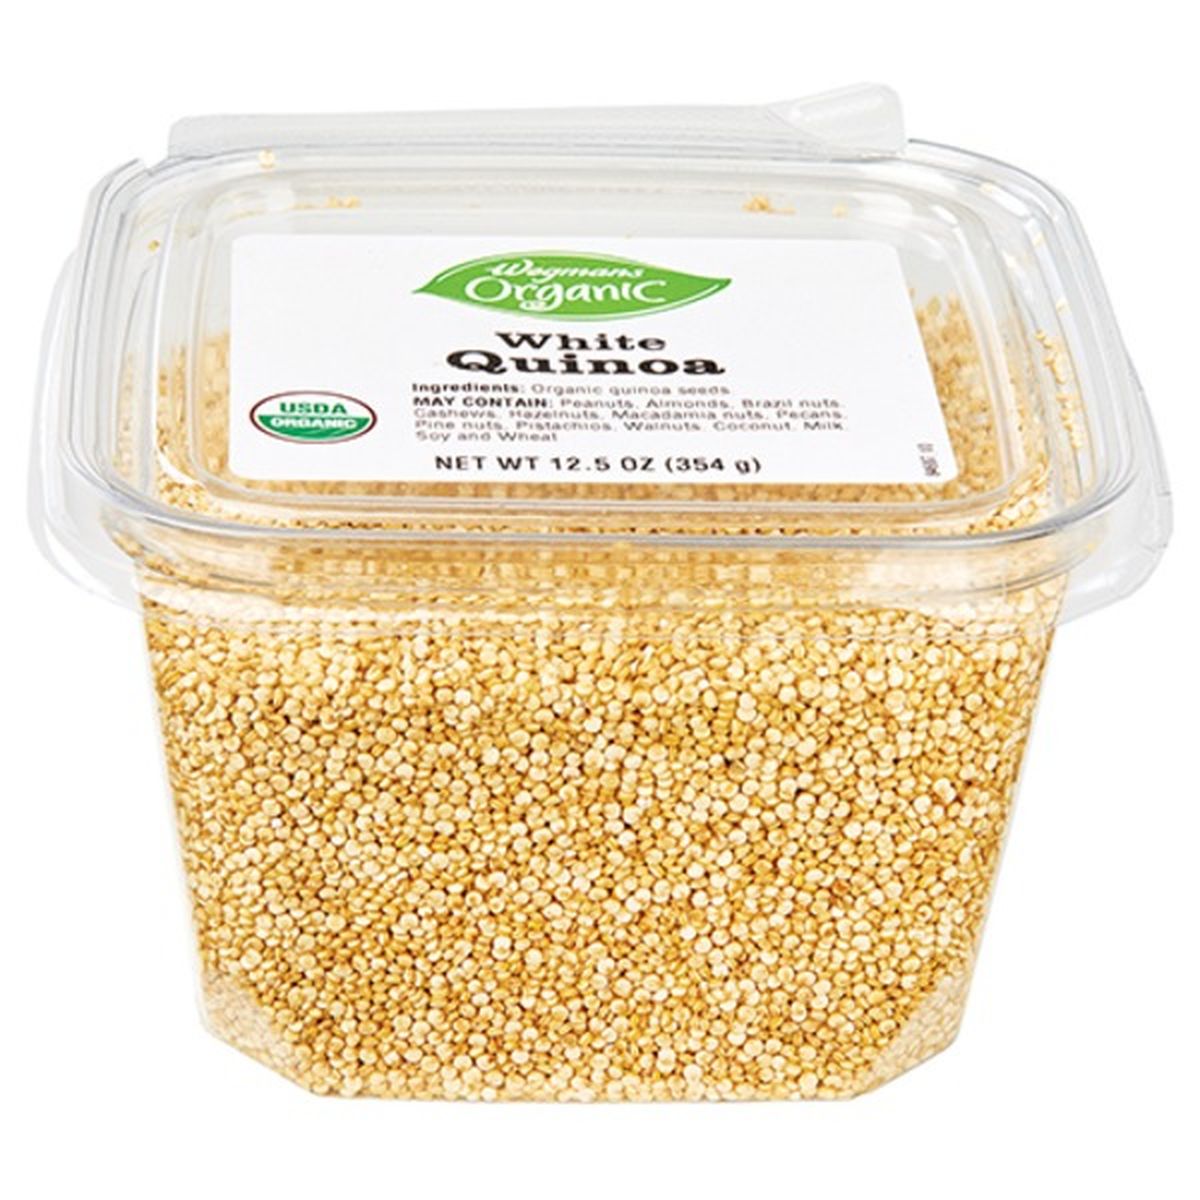 Calories in Wegmans Organic White Quinoa